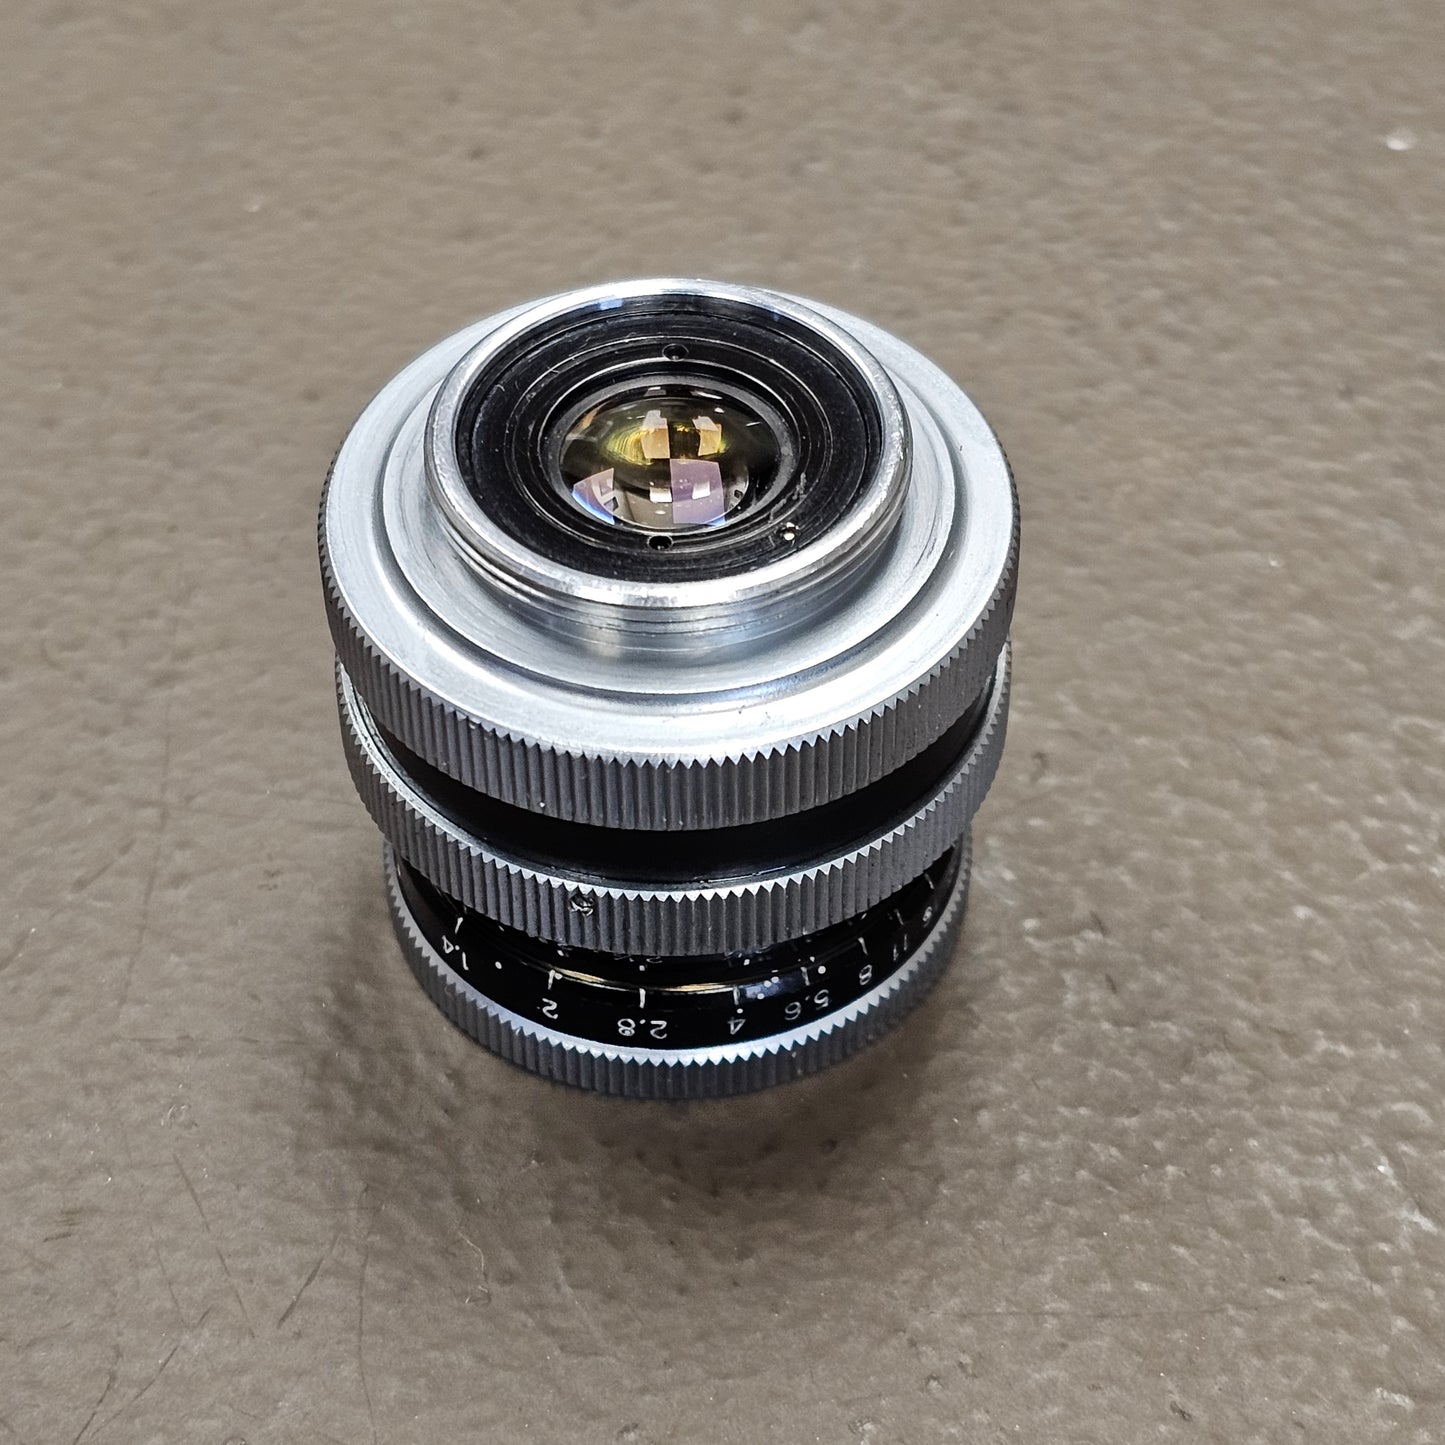 Switar 25mm f1.4 AR C-Mount Lens S# 307562